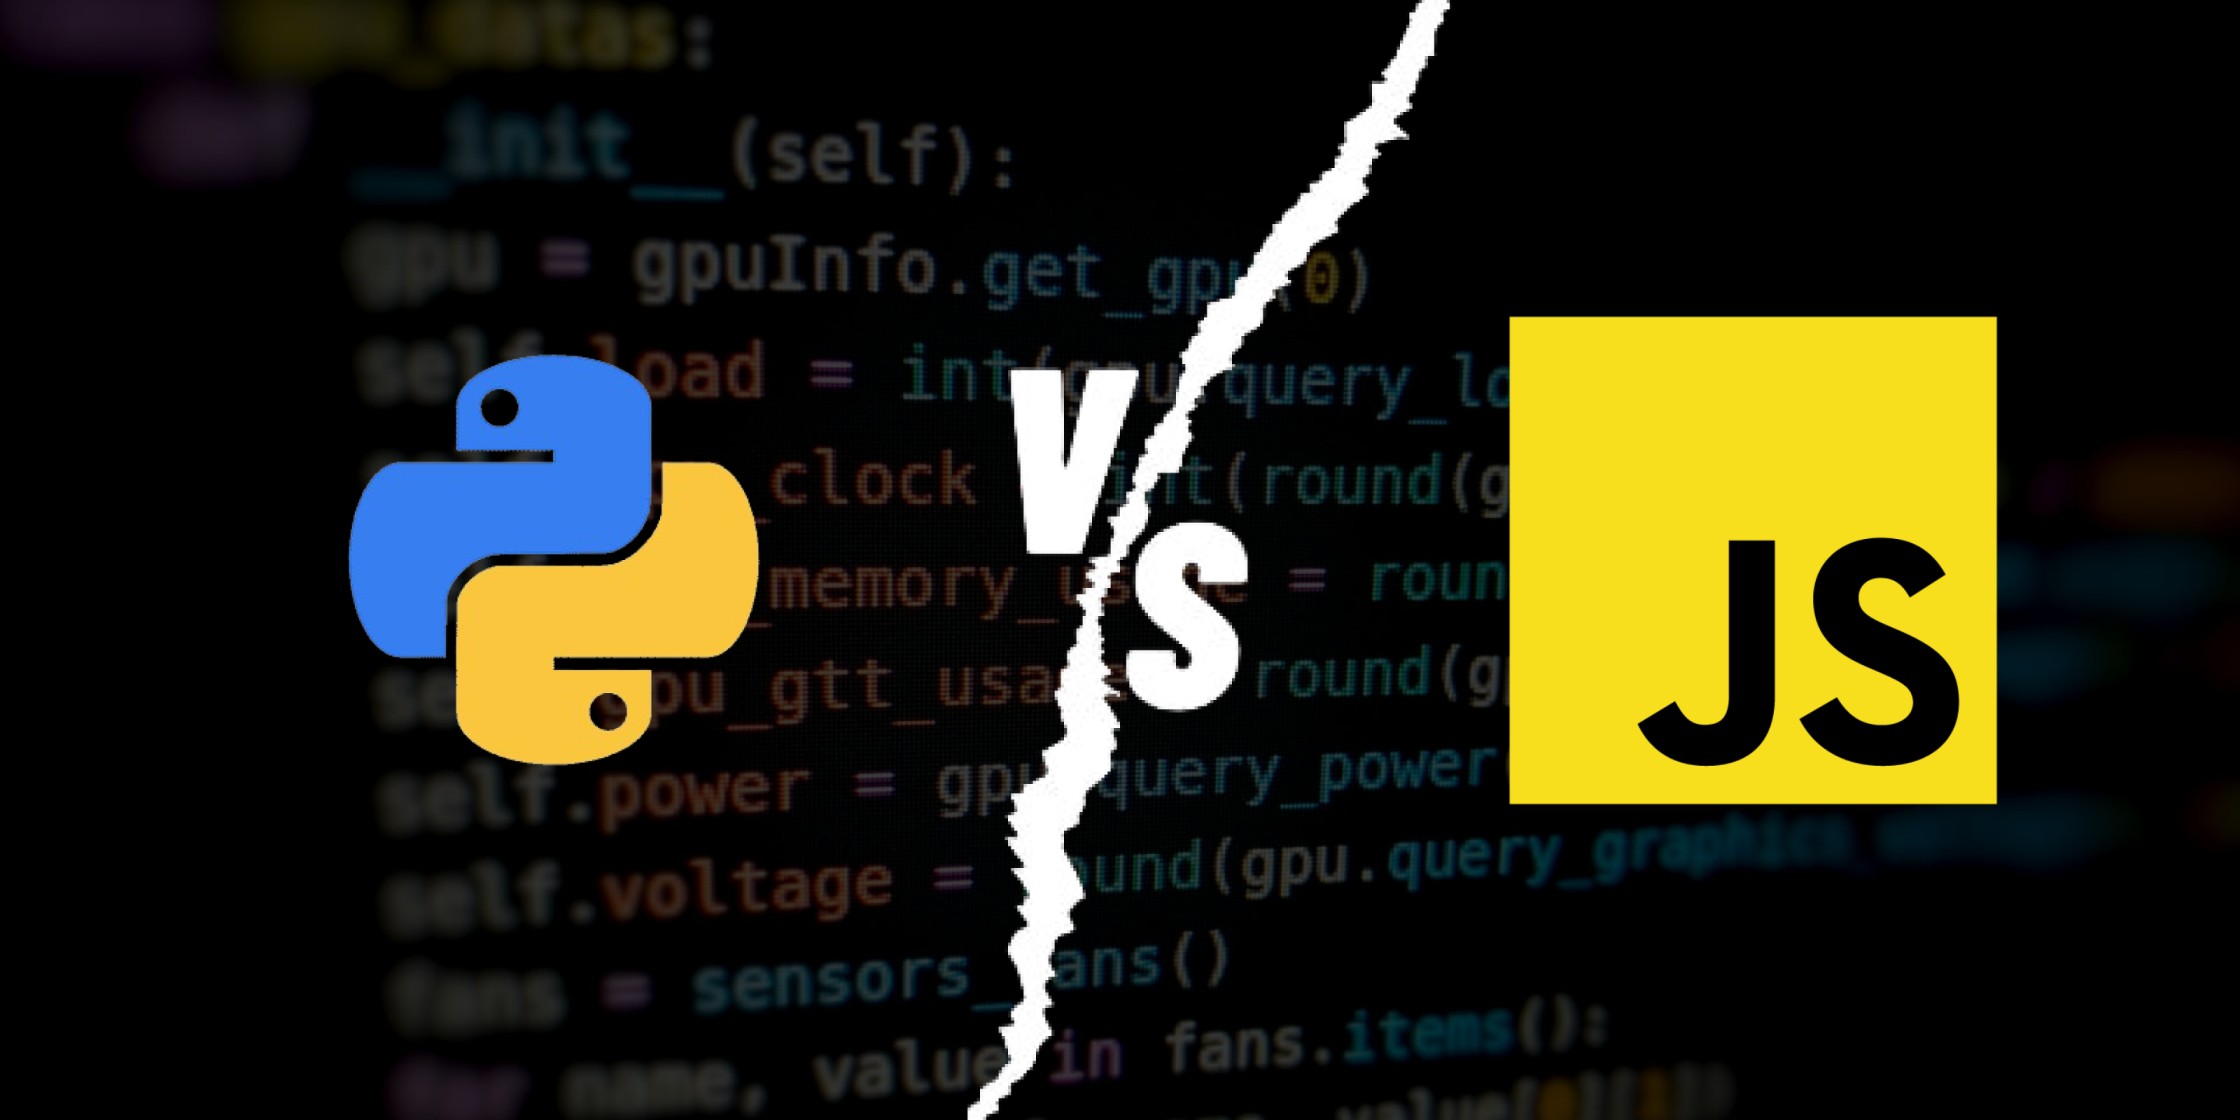 JavaScript vs Python